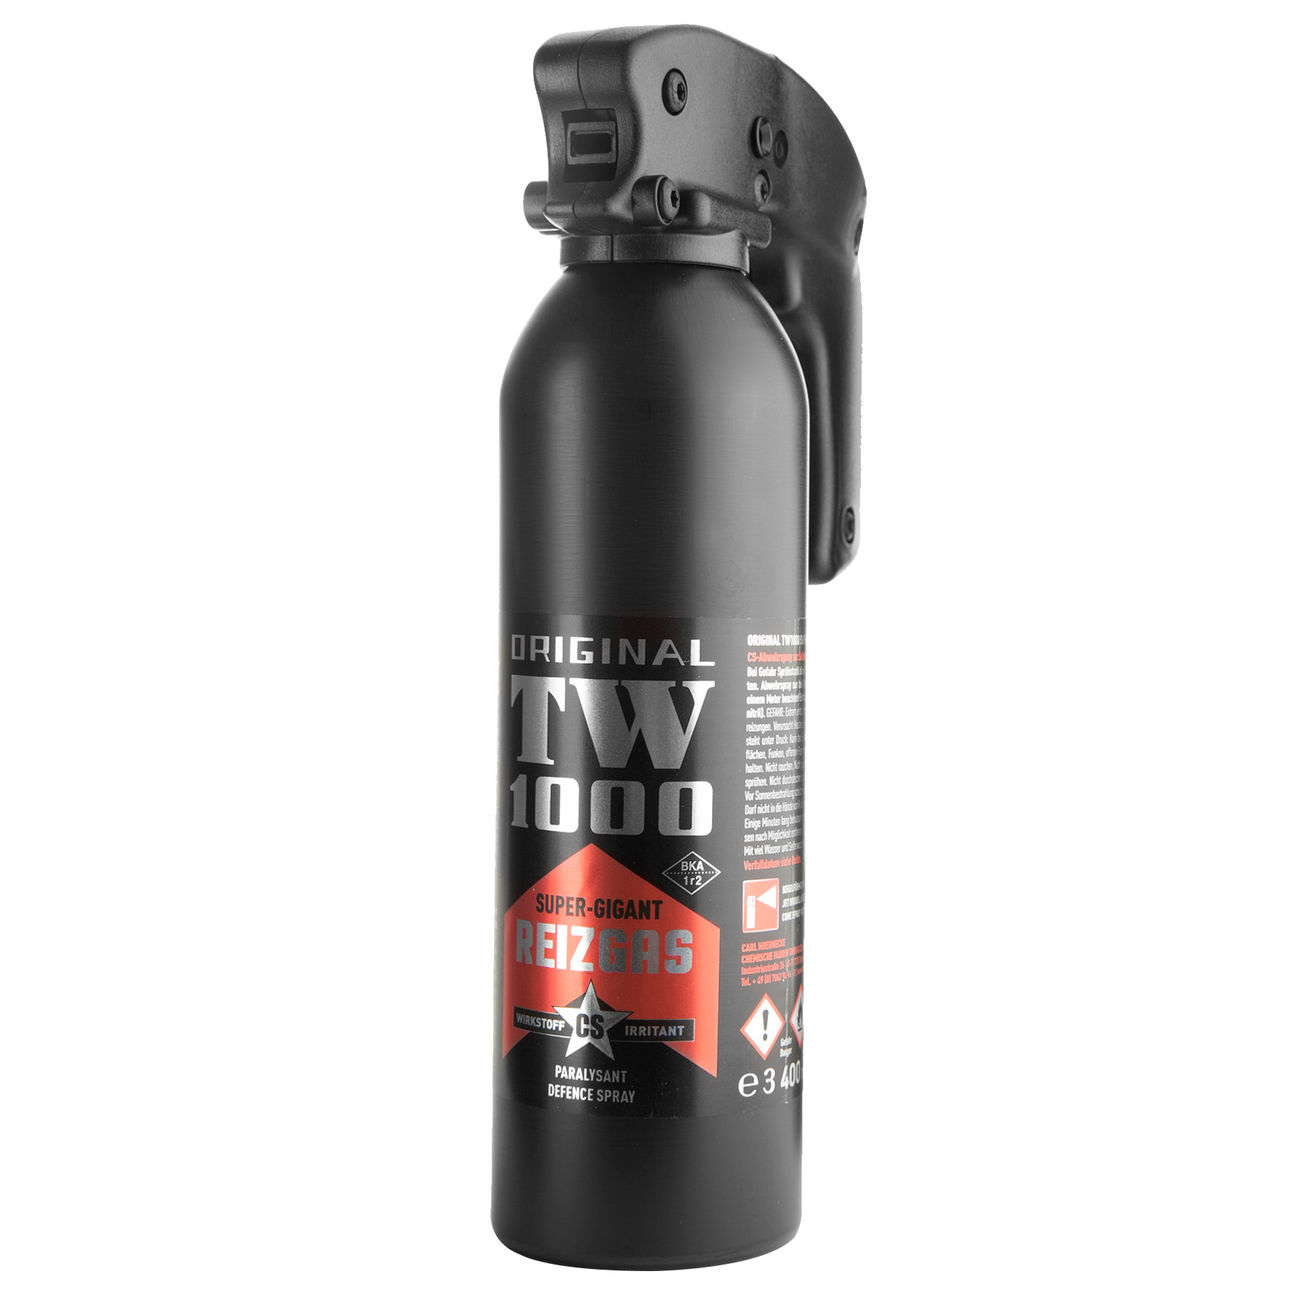 Abwehrspray TW1000 CS-Gas Spray Super-Gigant, 400ml